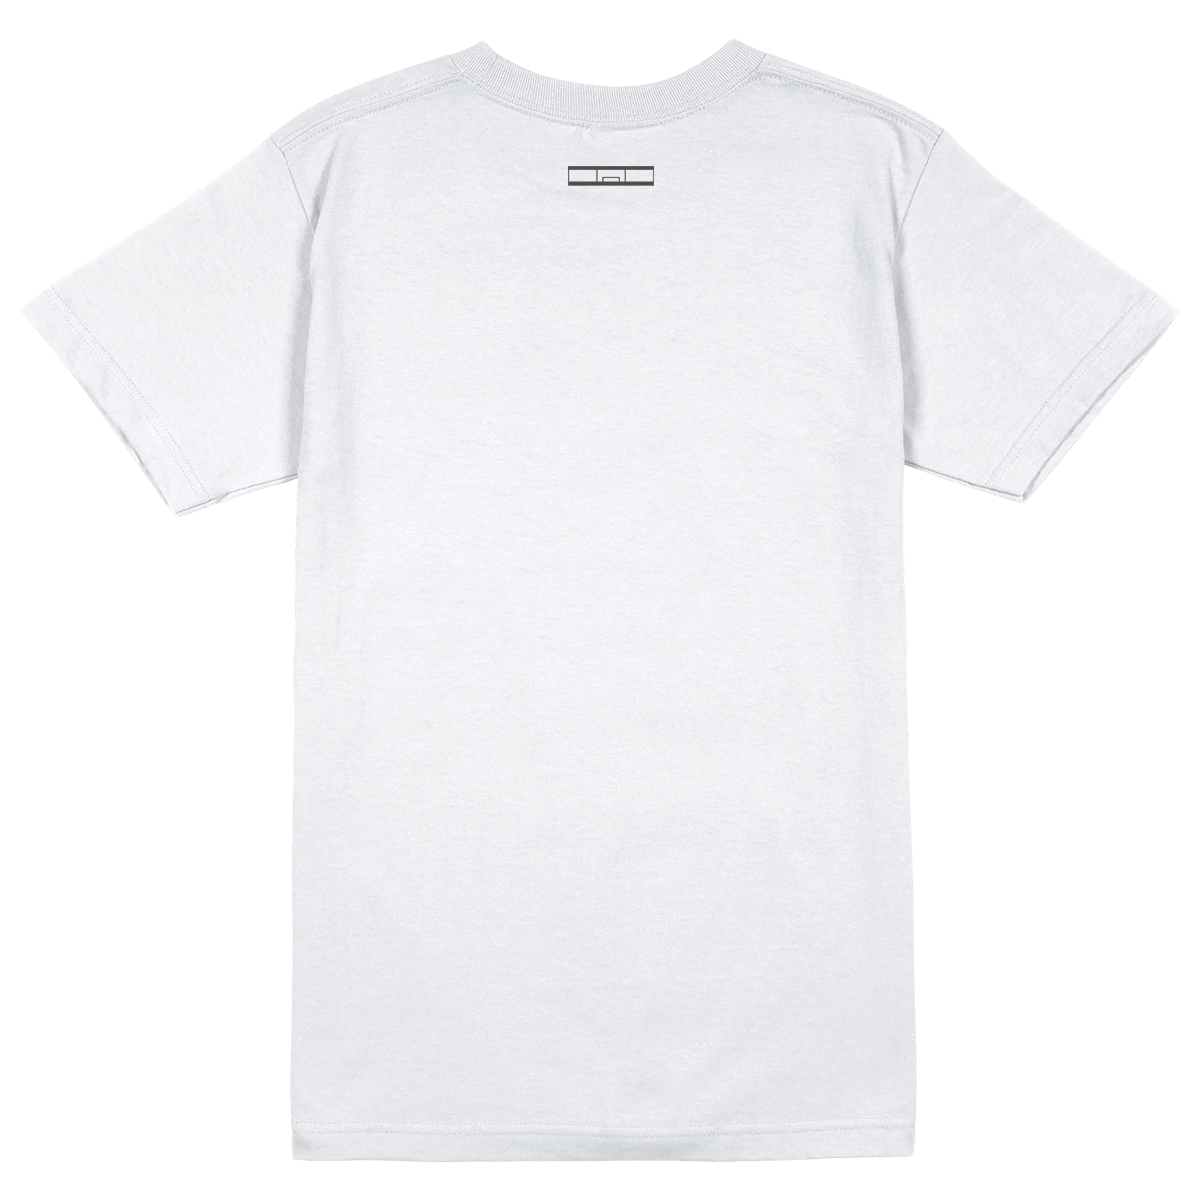 Topfanz T-shirt blanc "DE K"